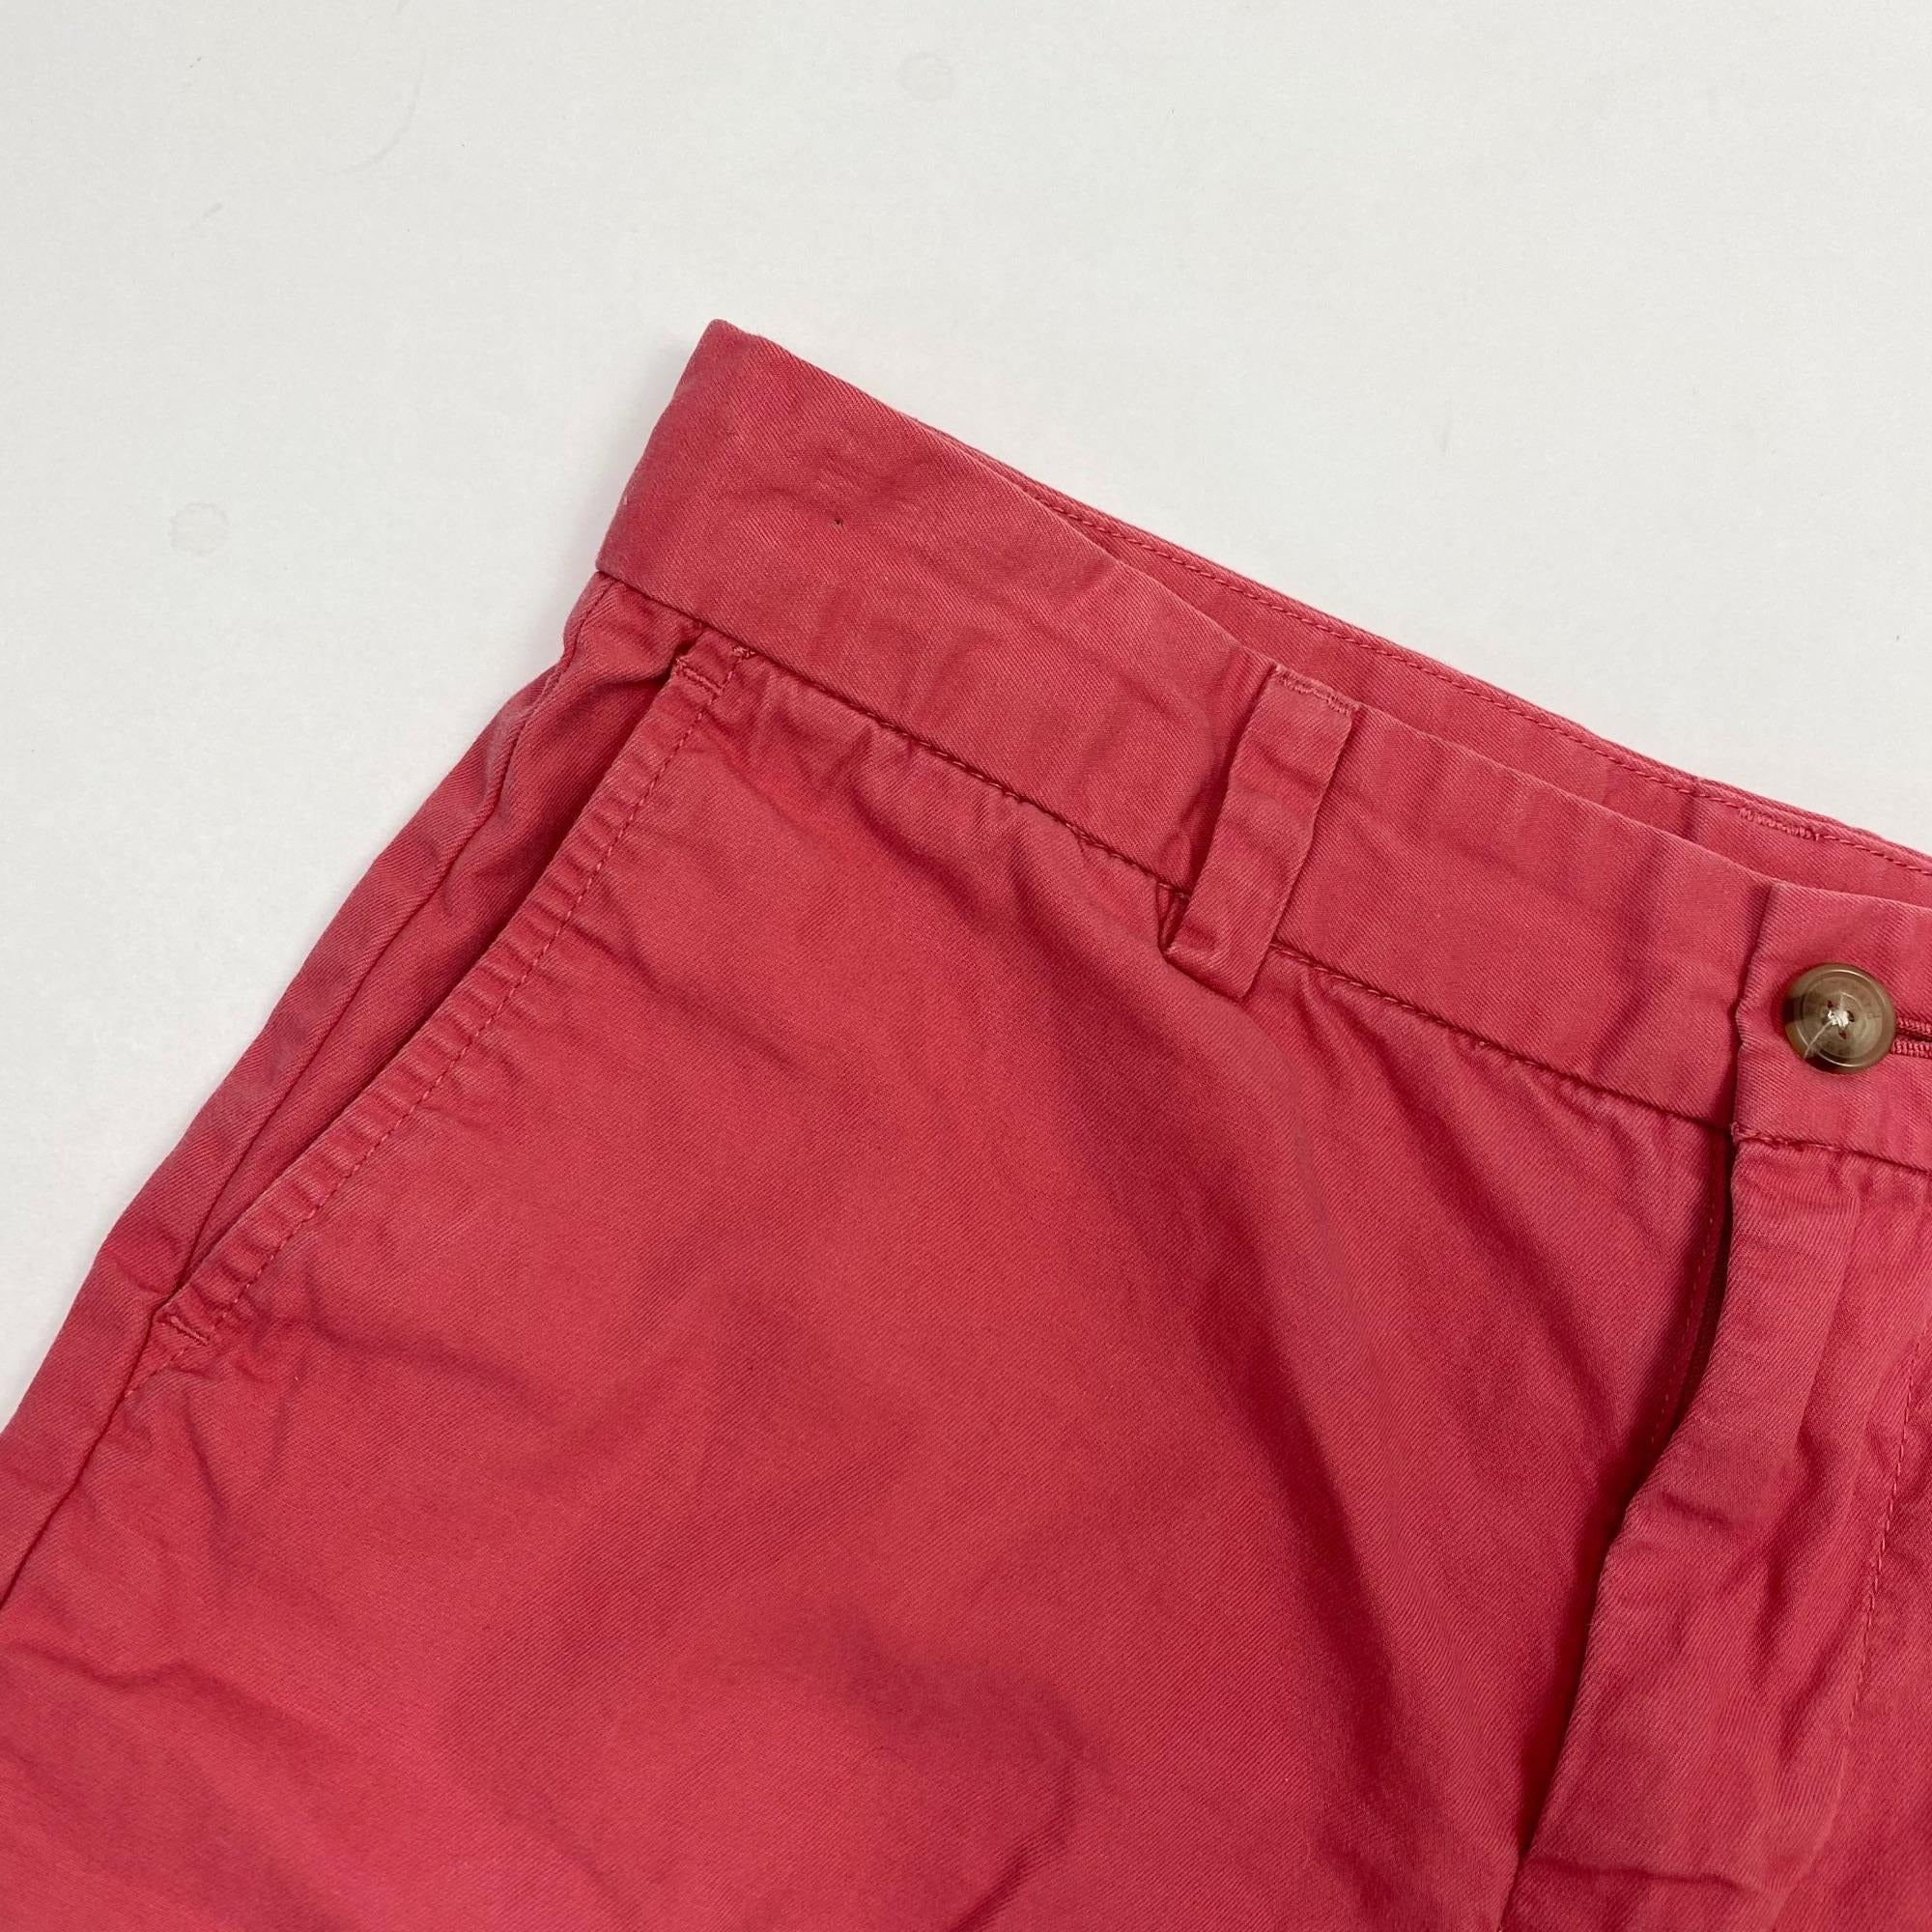 Vineyard Vines Nantucket Red Chino Shorts Size 12